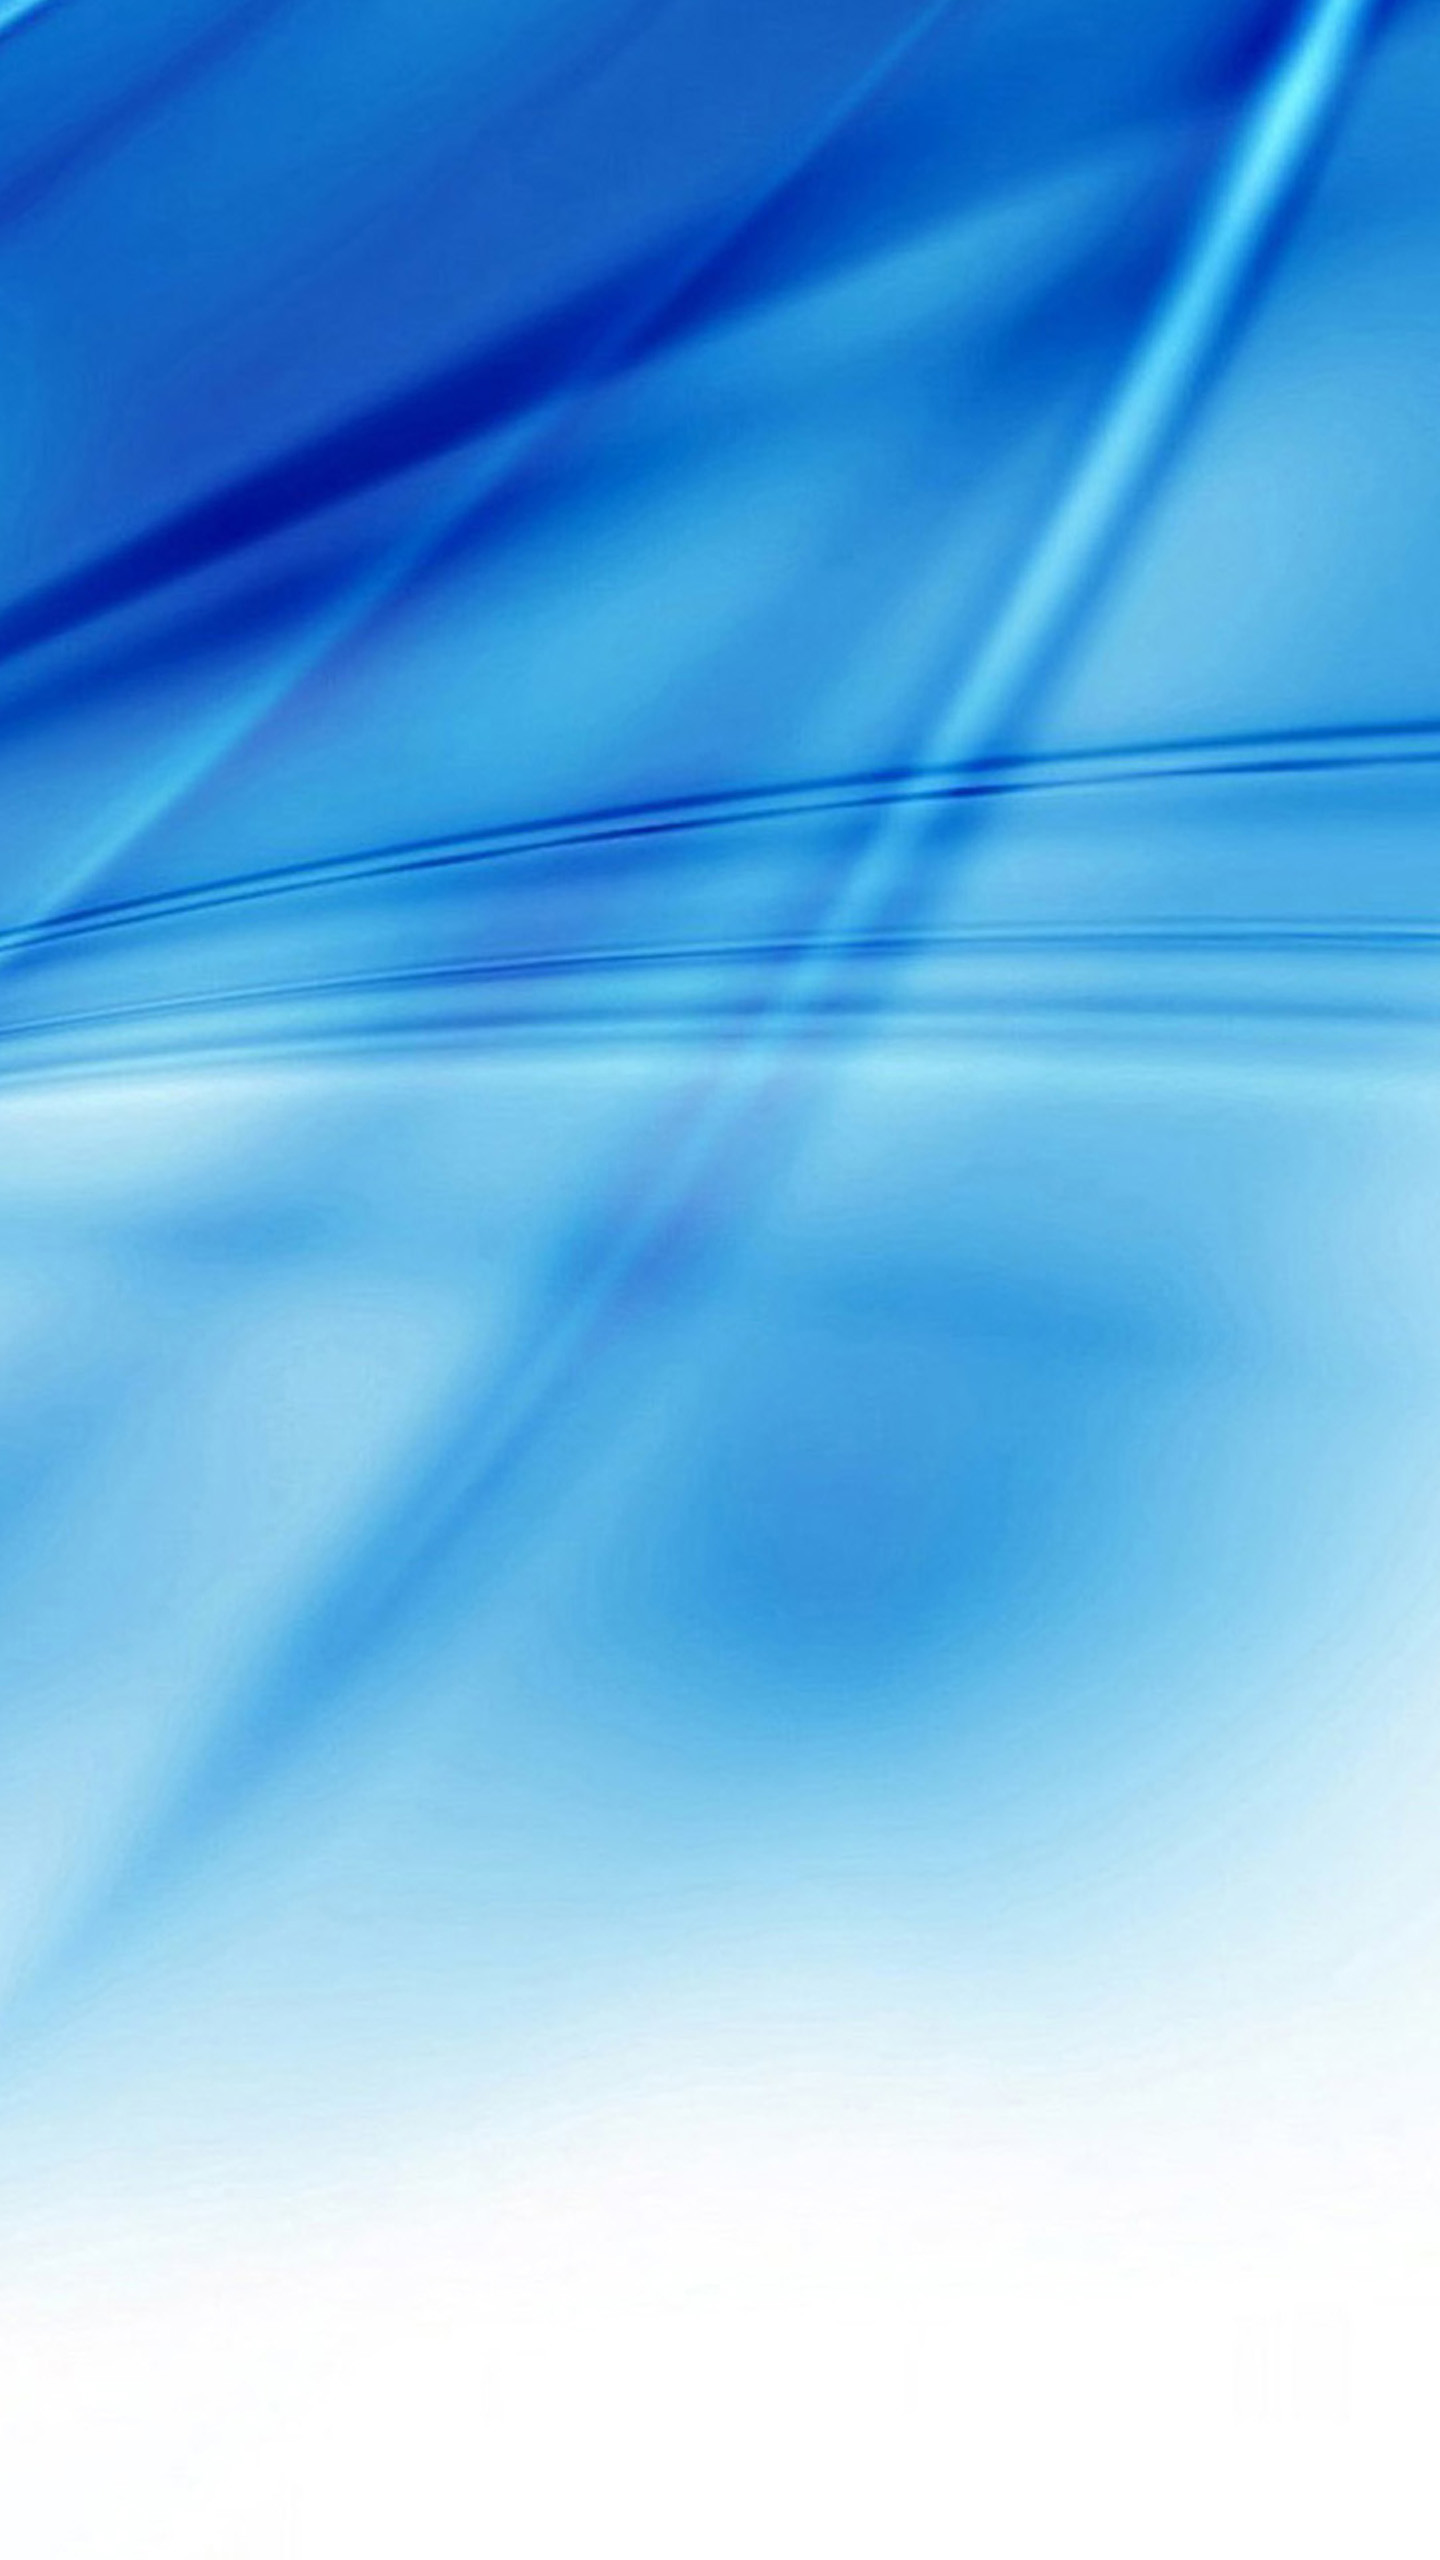 1440x2560 Simple Blue Inspiration Nexus 6 Wallpapers, Nexus 6 Wallpapers And ..